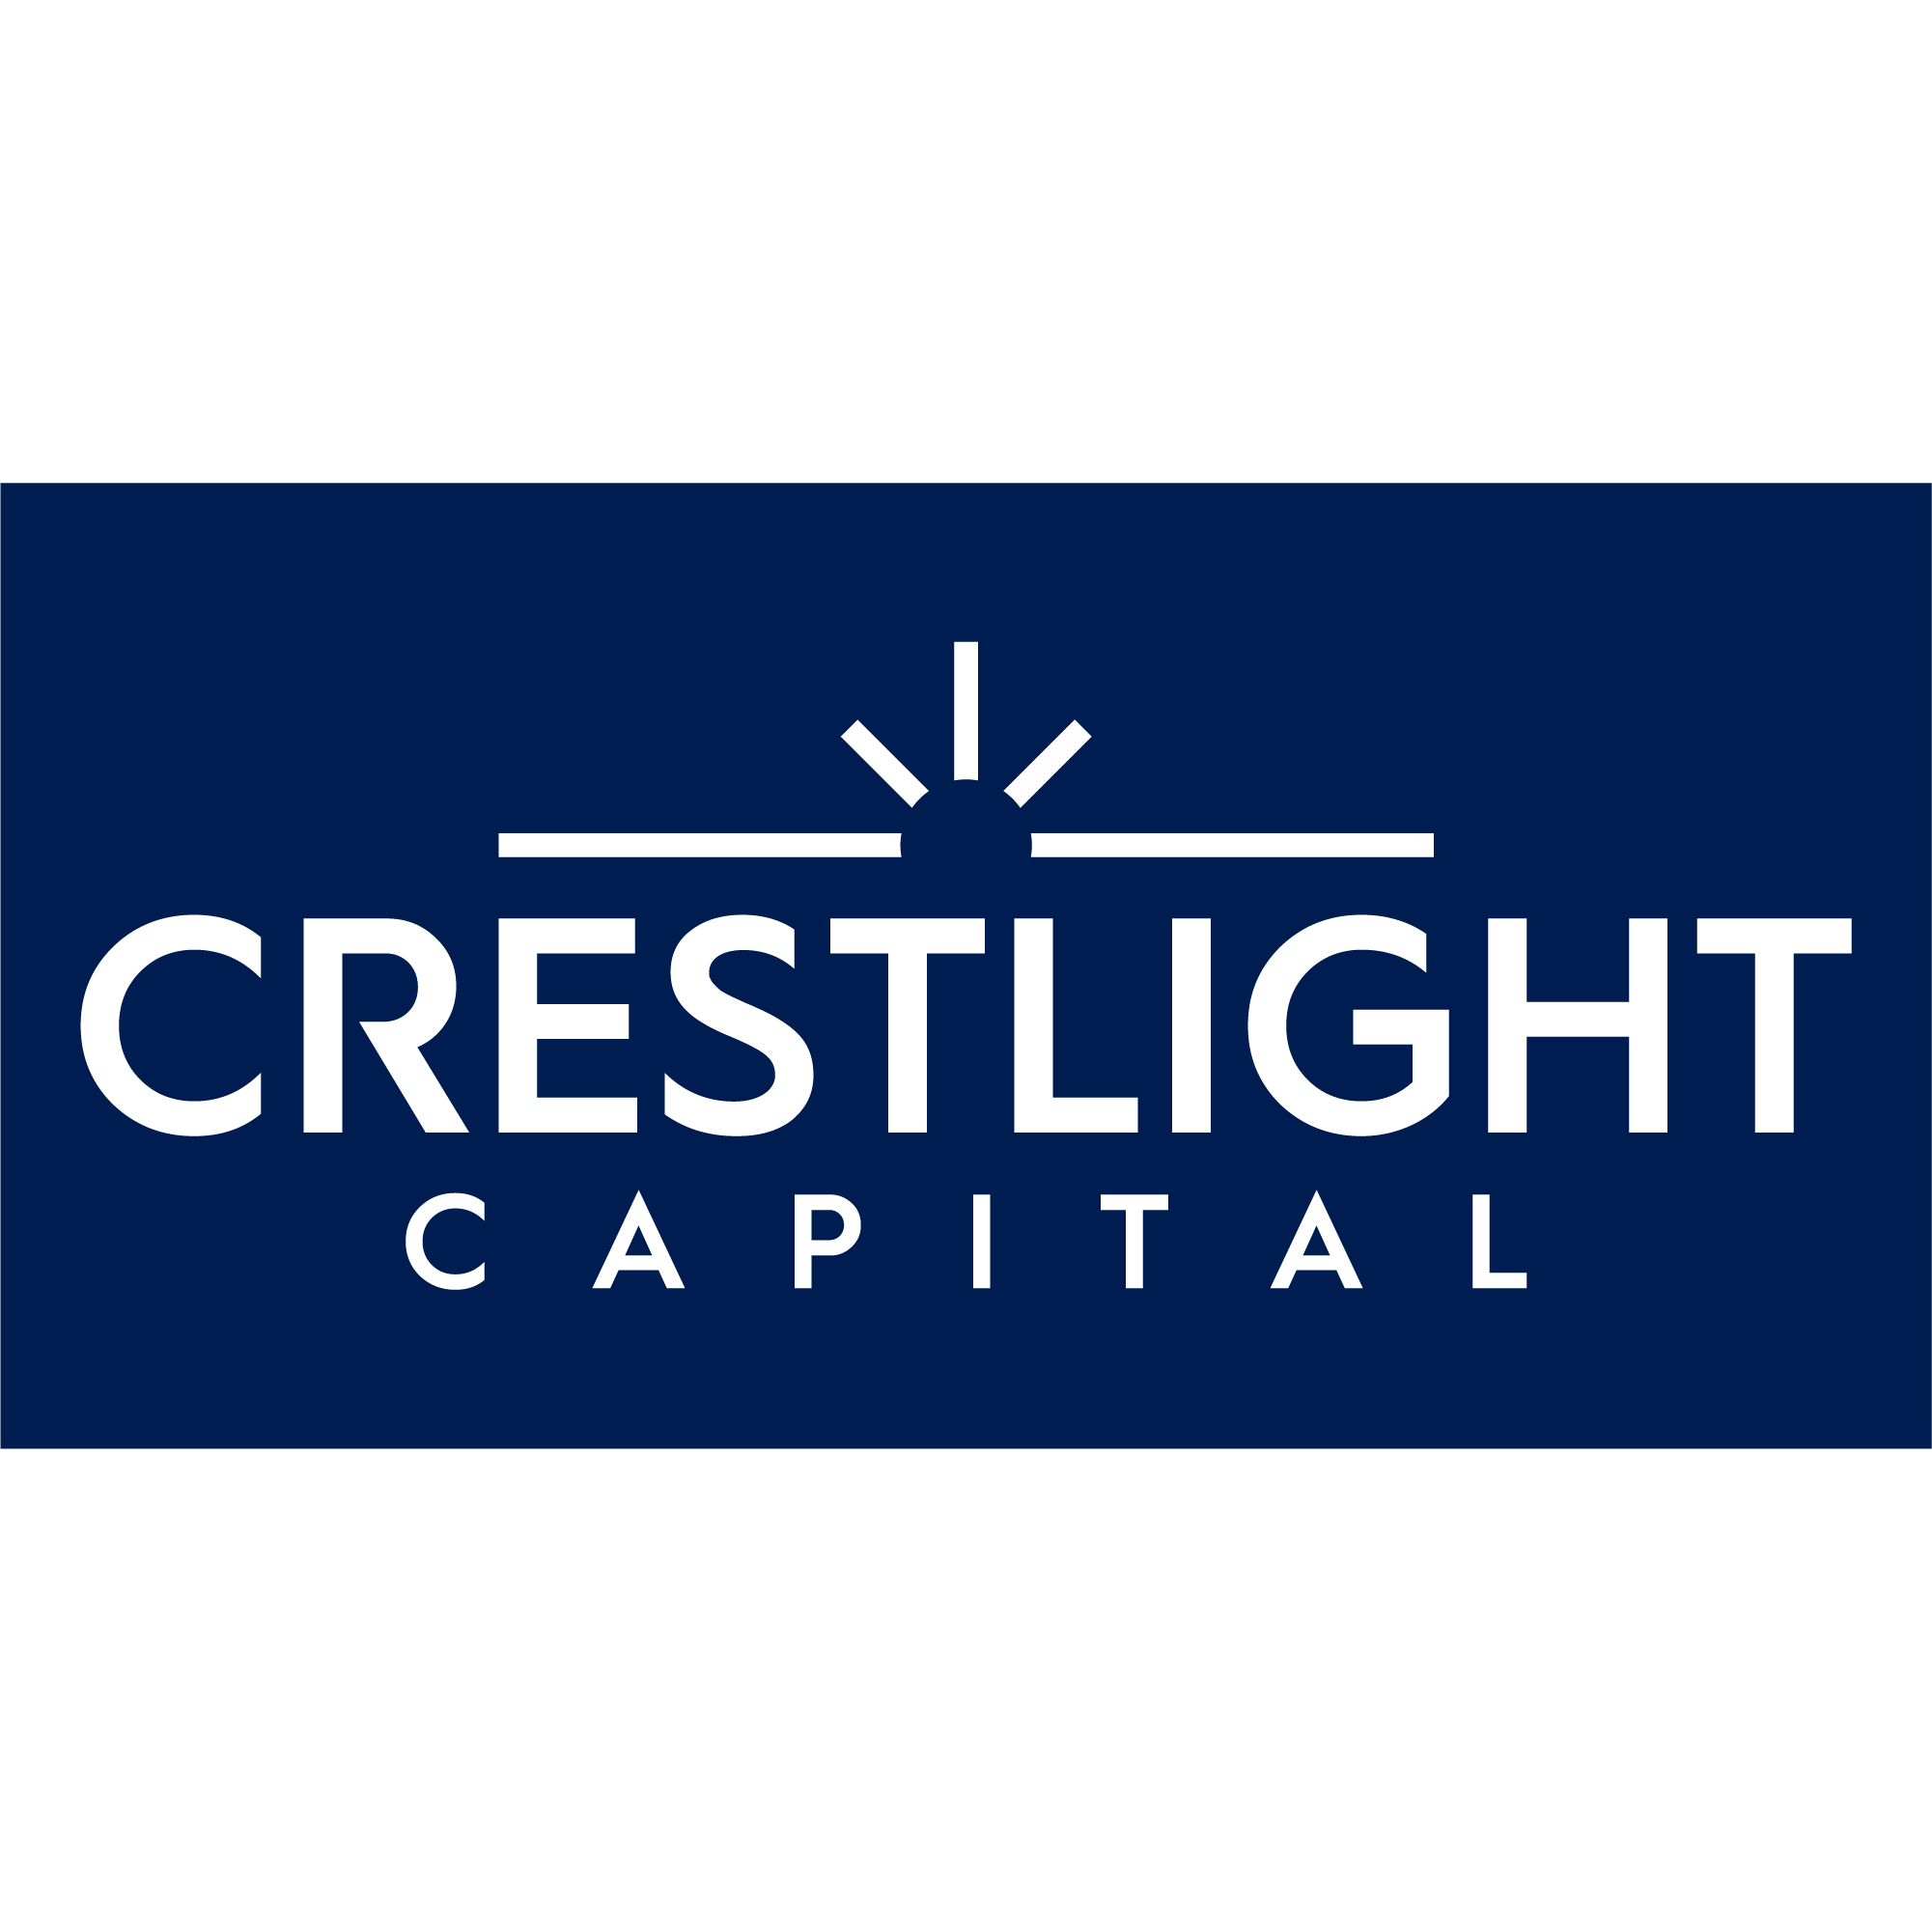 Crestlight logo